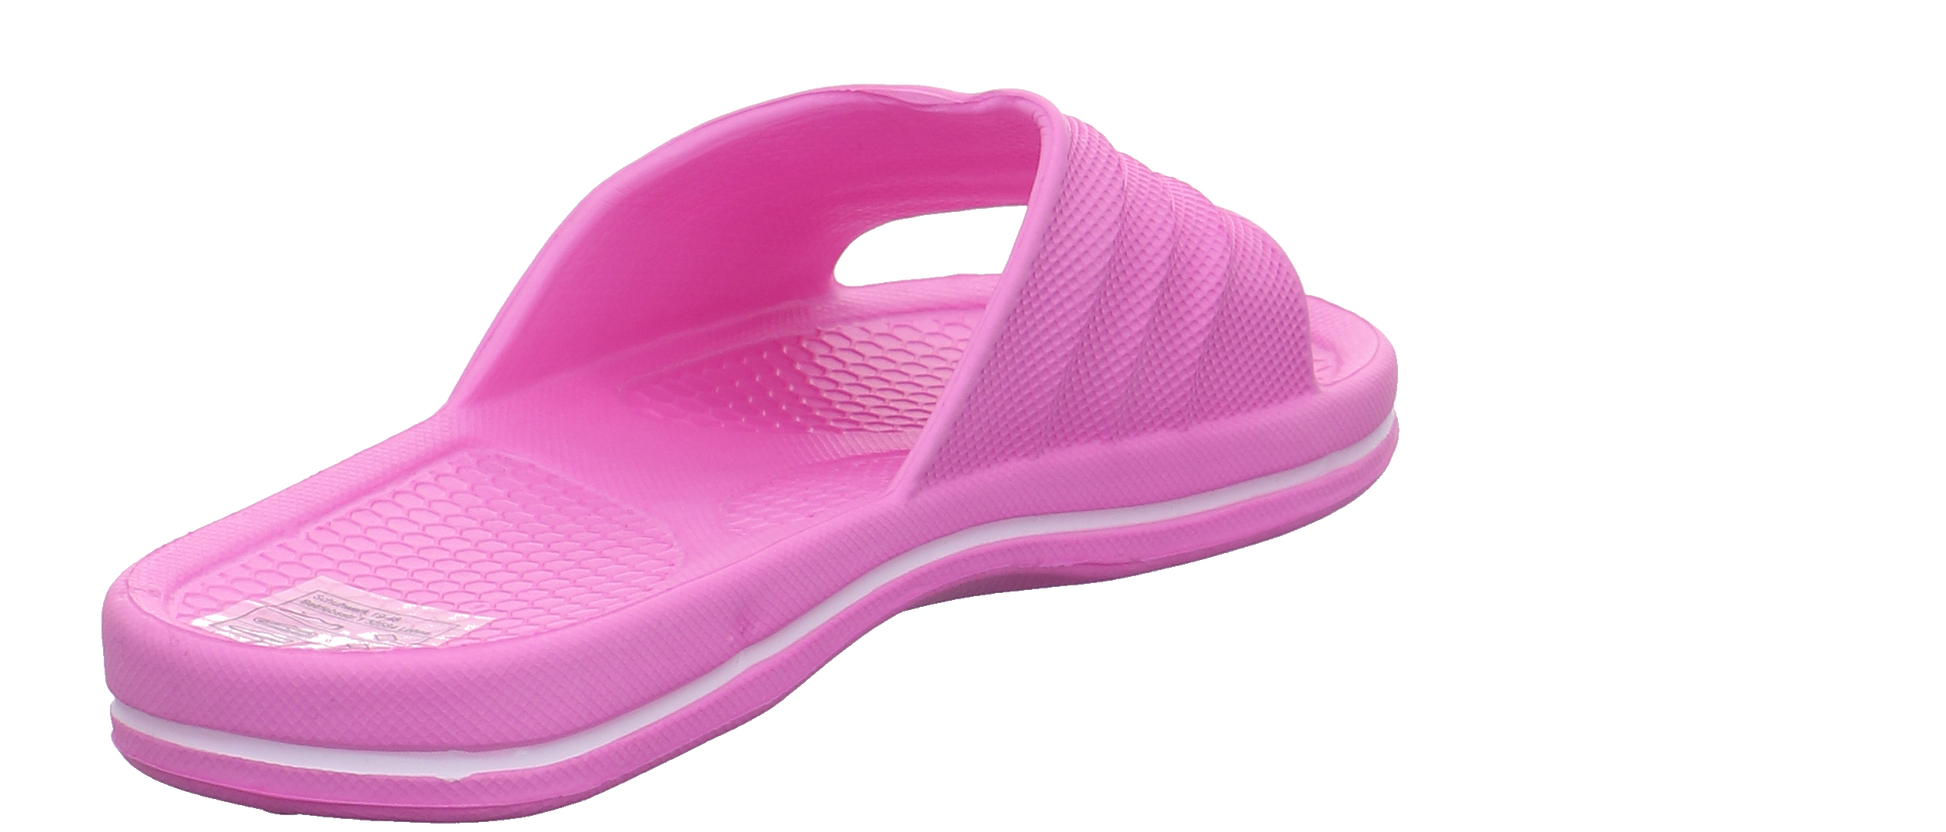 Herold Schuhe  pink Bild5